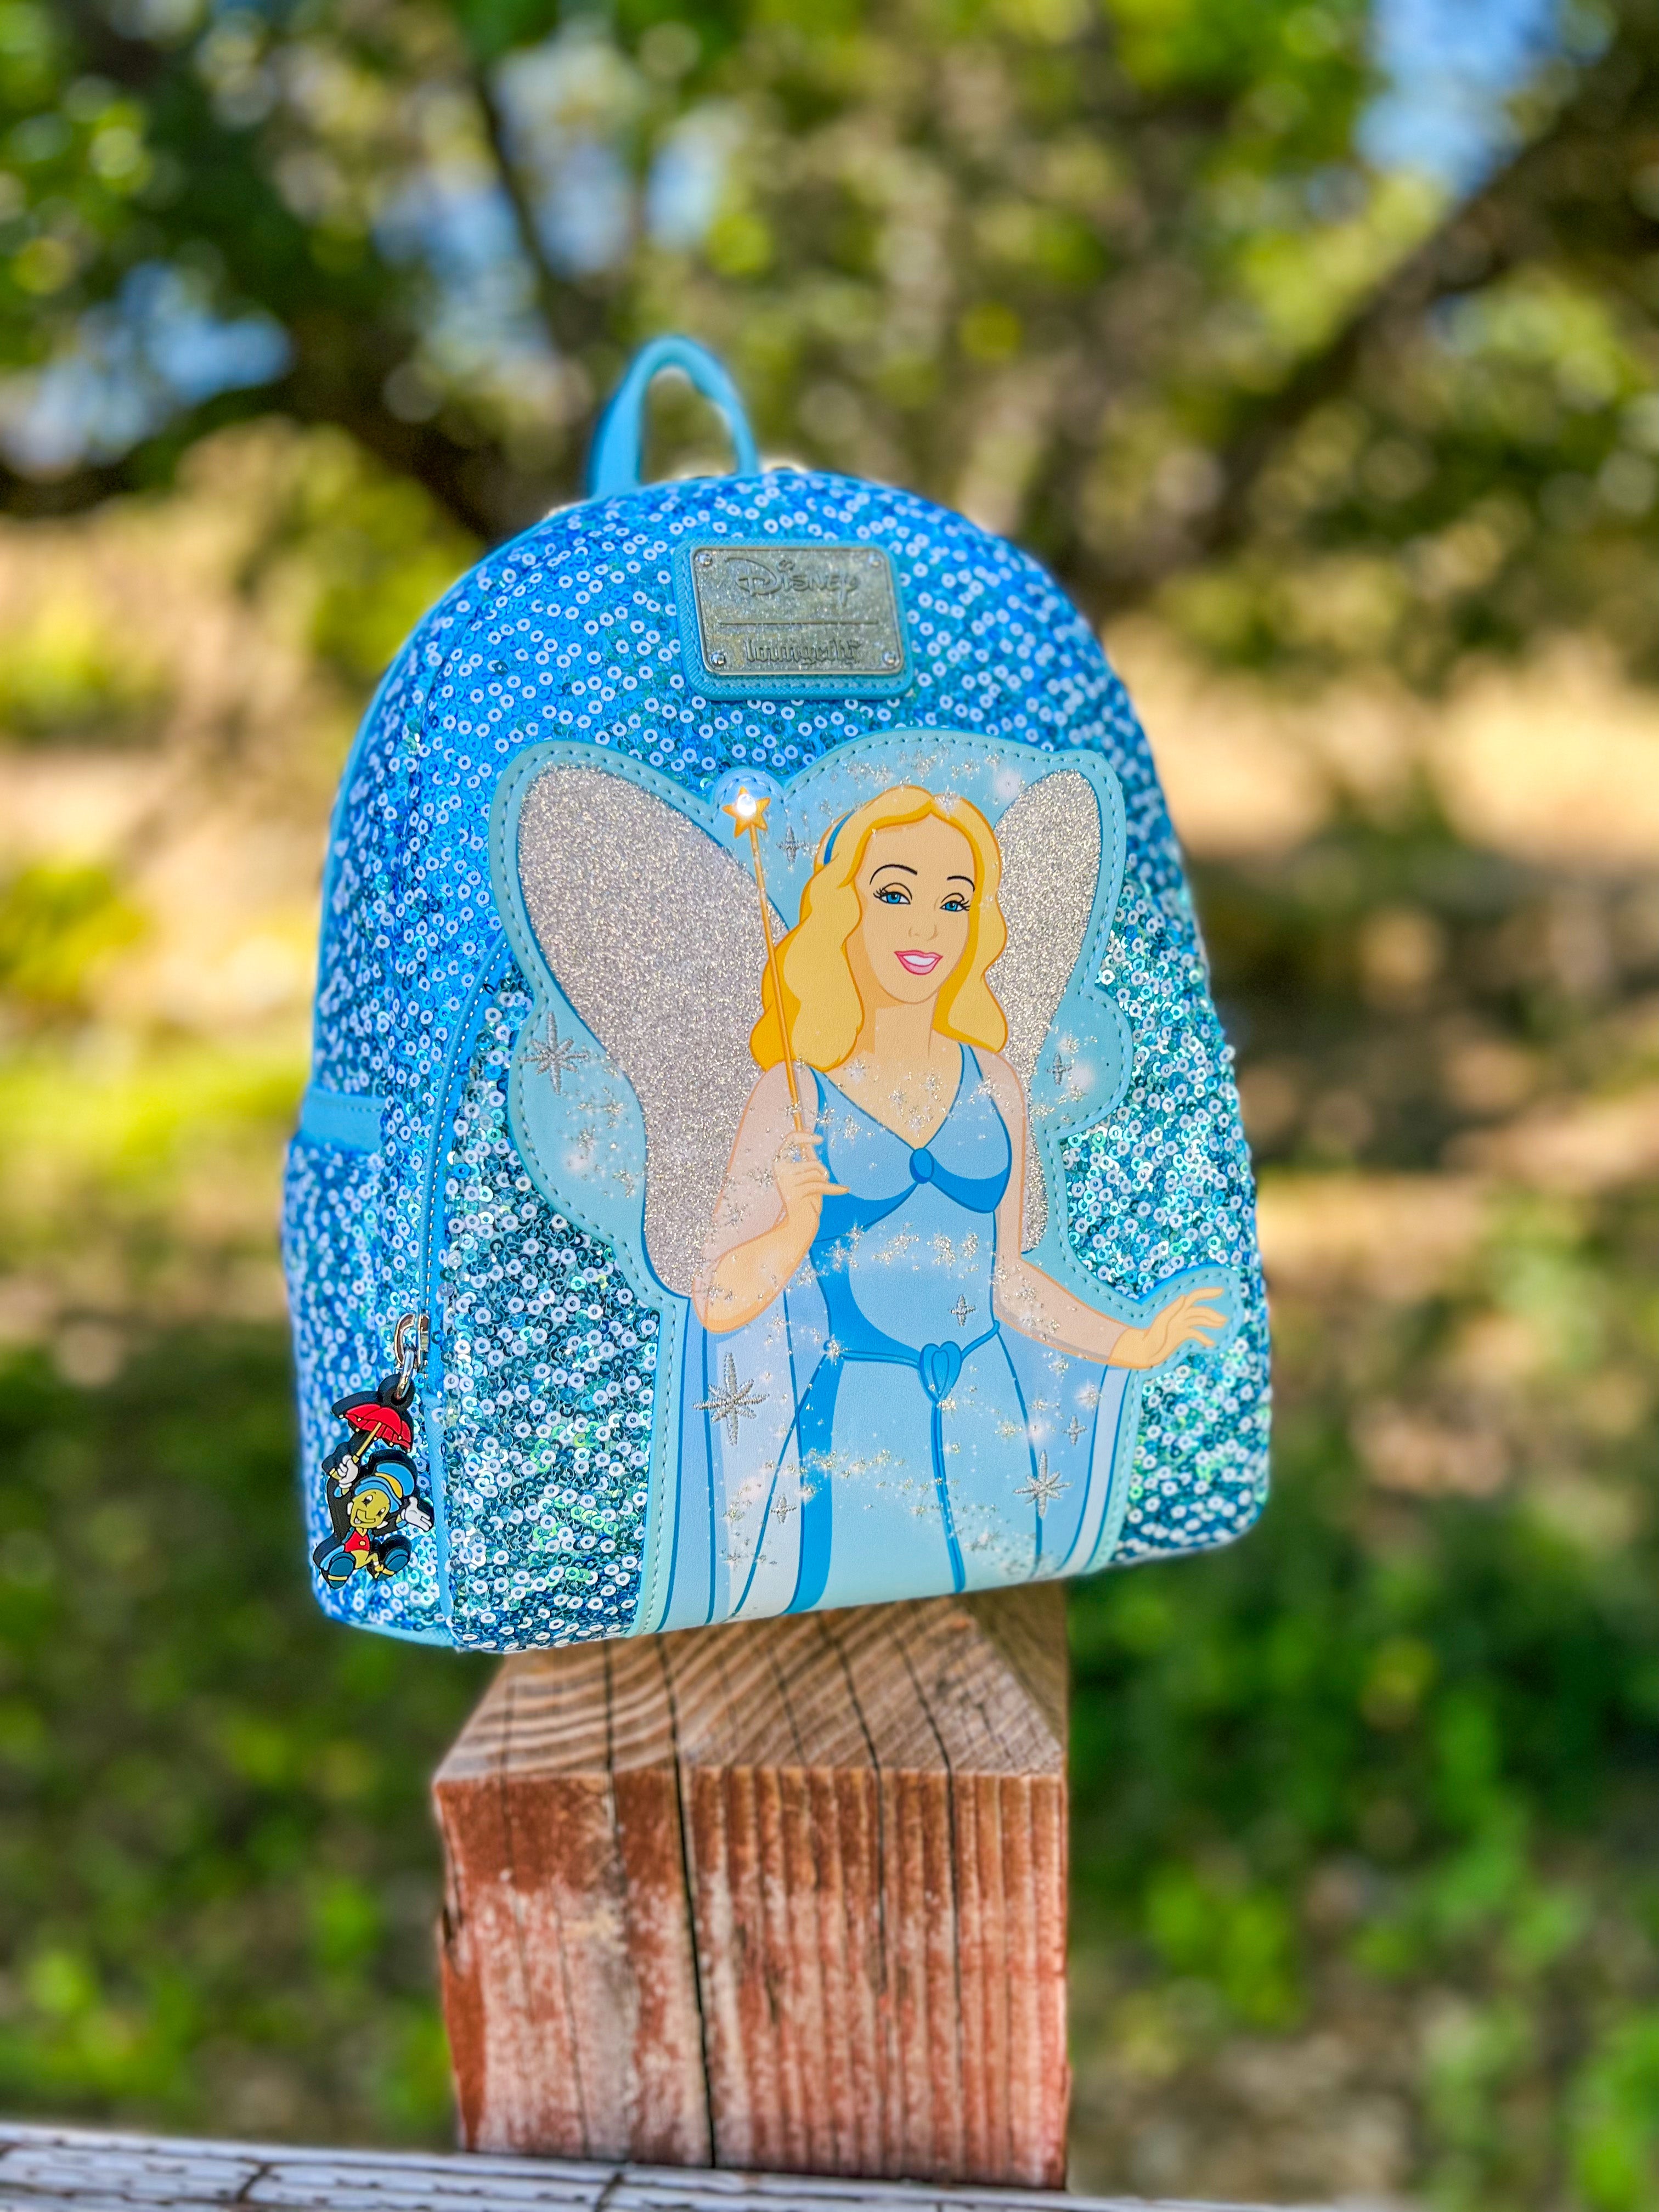 Danielle Nicole Disney Sleeping Beauty princess Tote hand Bag One Size